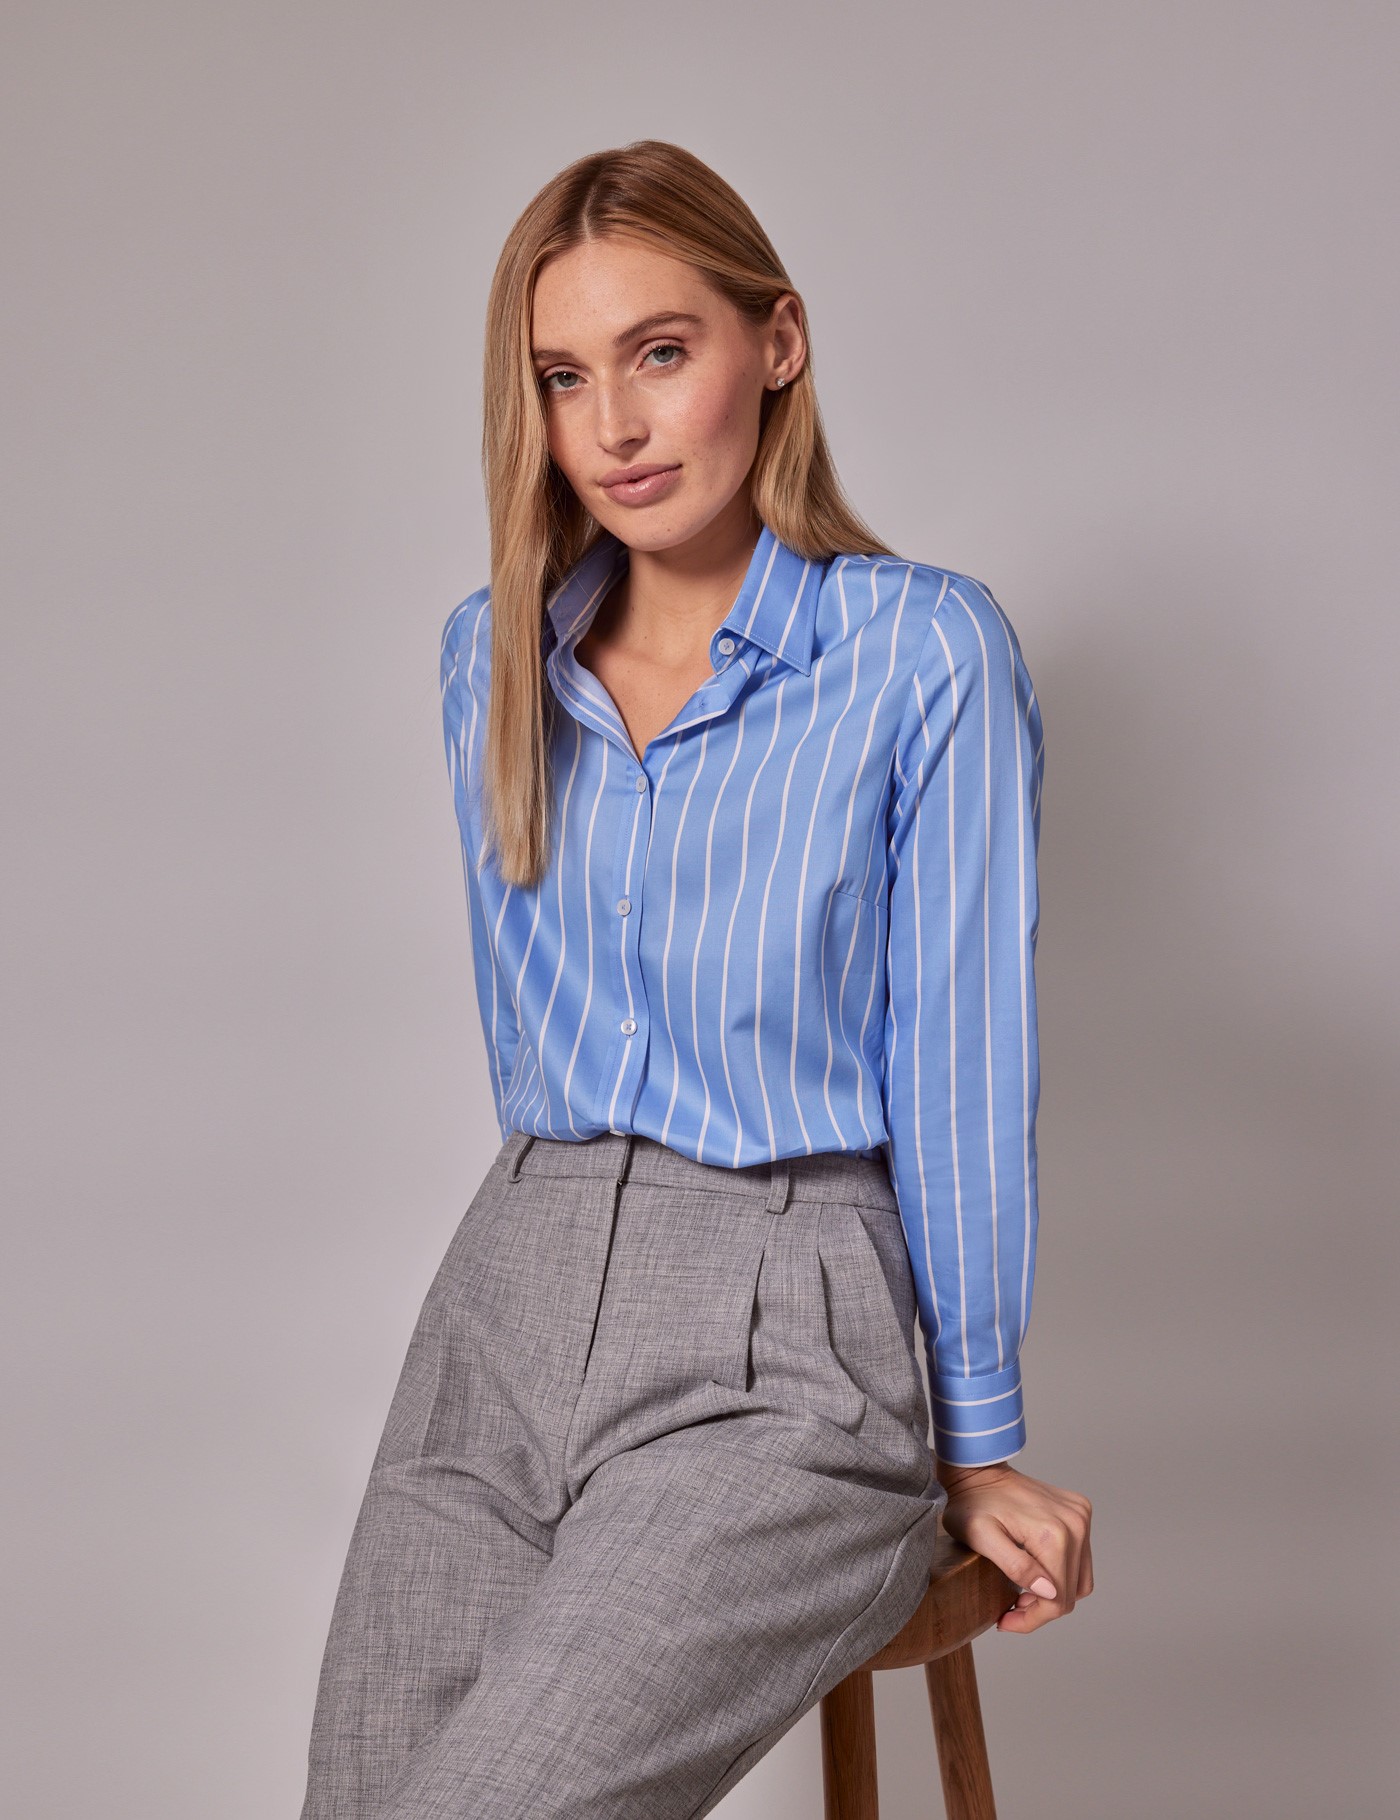 Women's Executive Blue & White Stripe Semi-Fitted Shirt